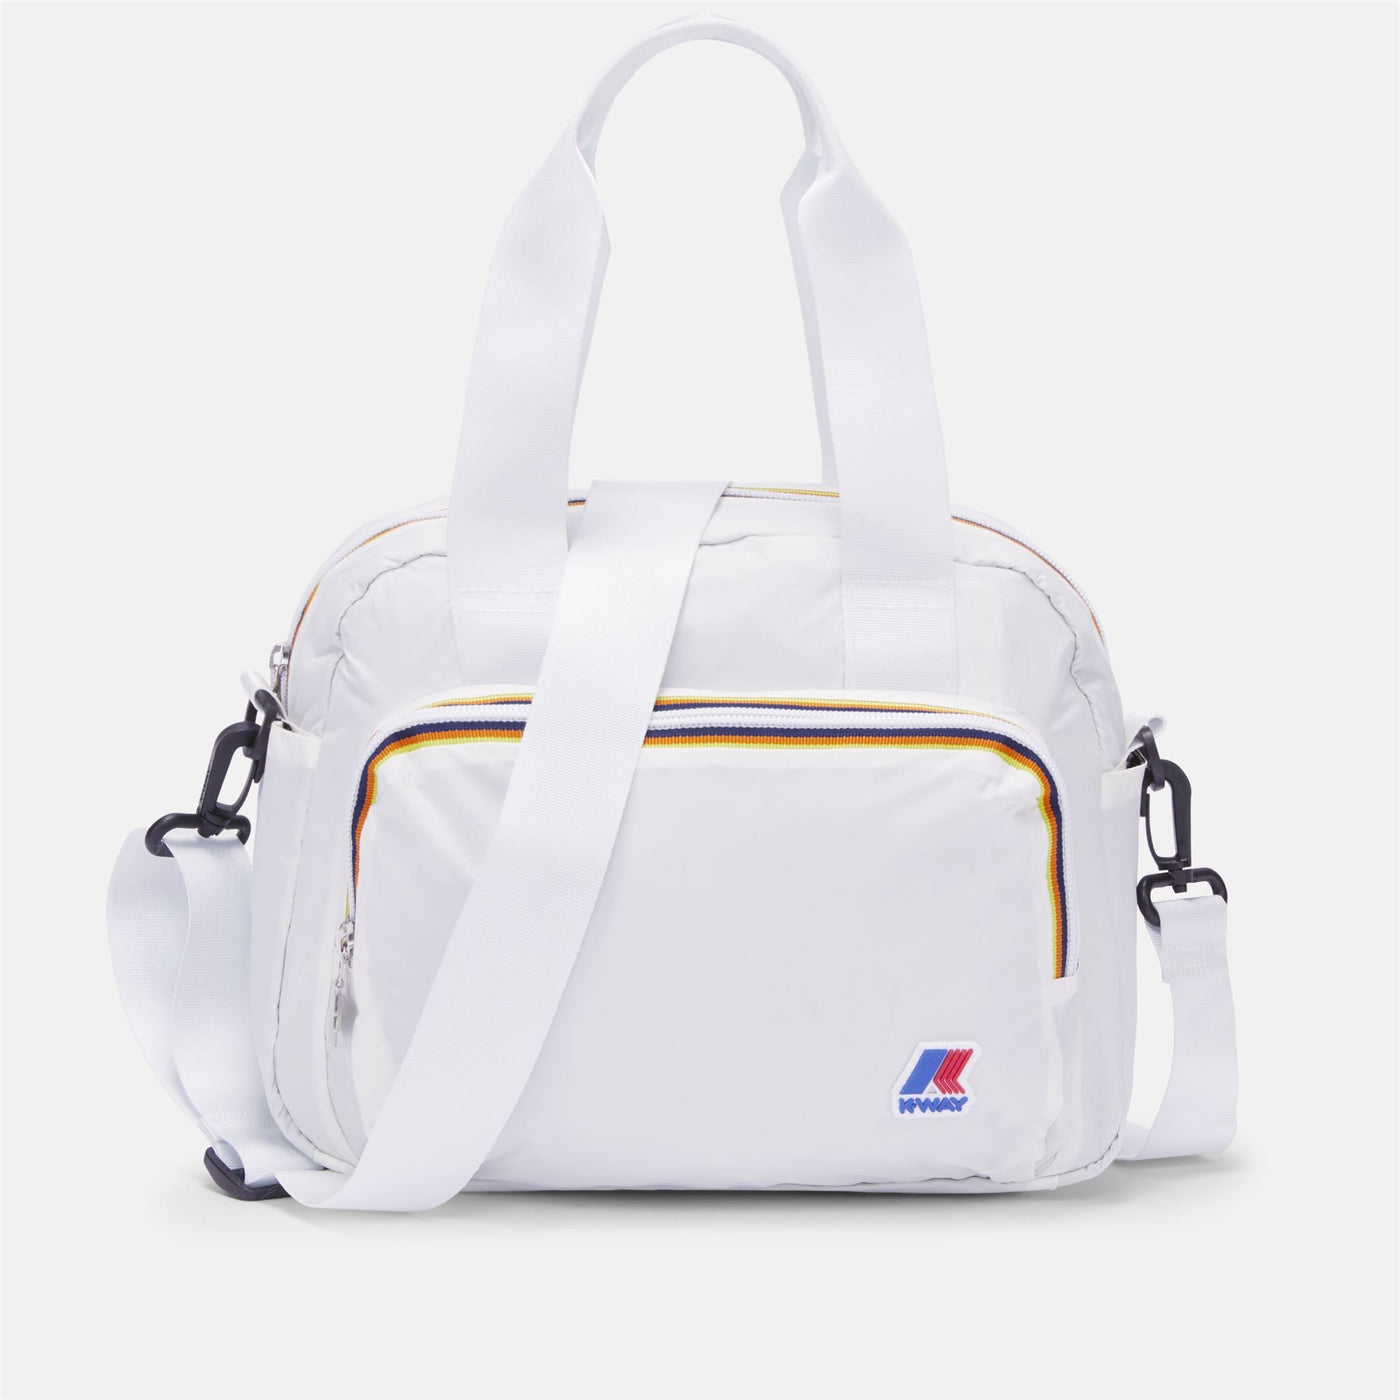 Bags Woman FARA S Shopping Bag White | K-Way Photo (jpg Rgb)			